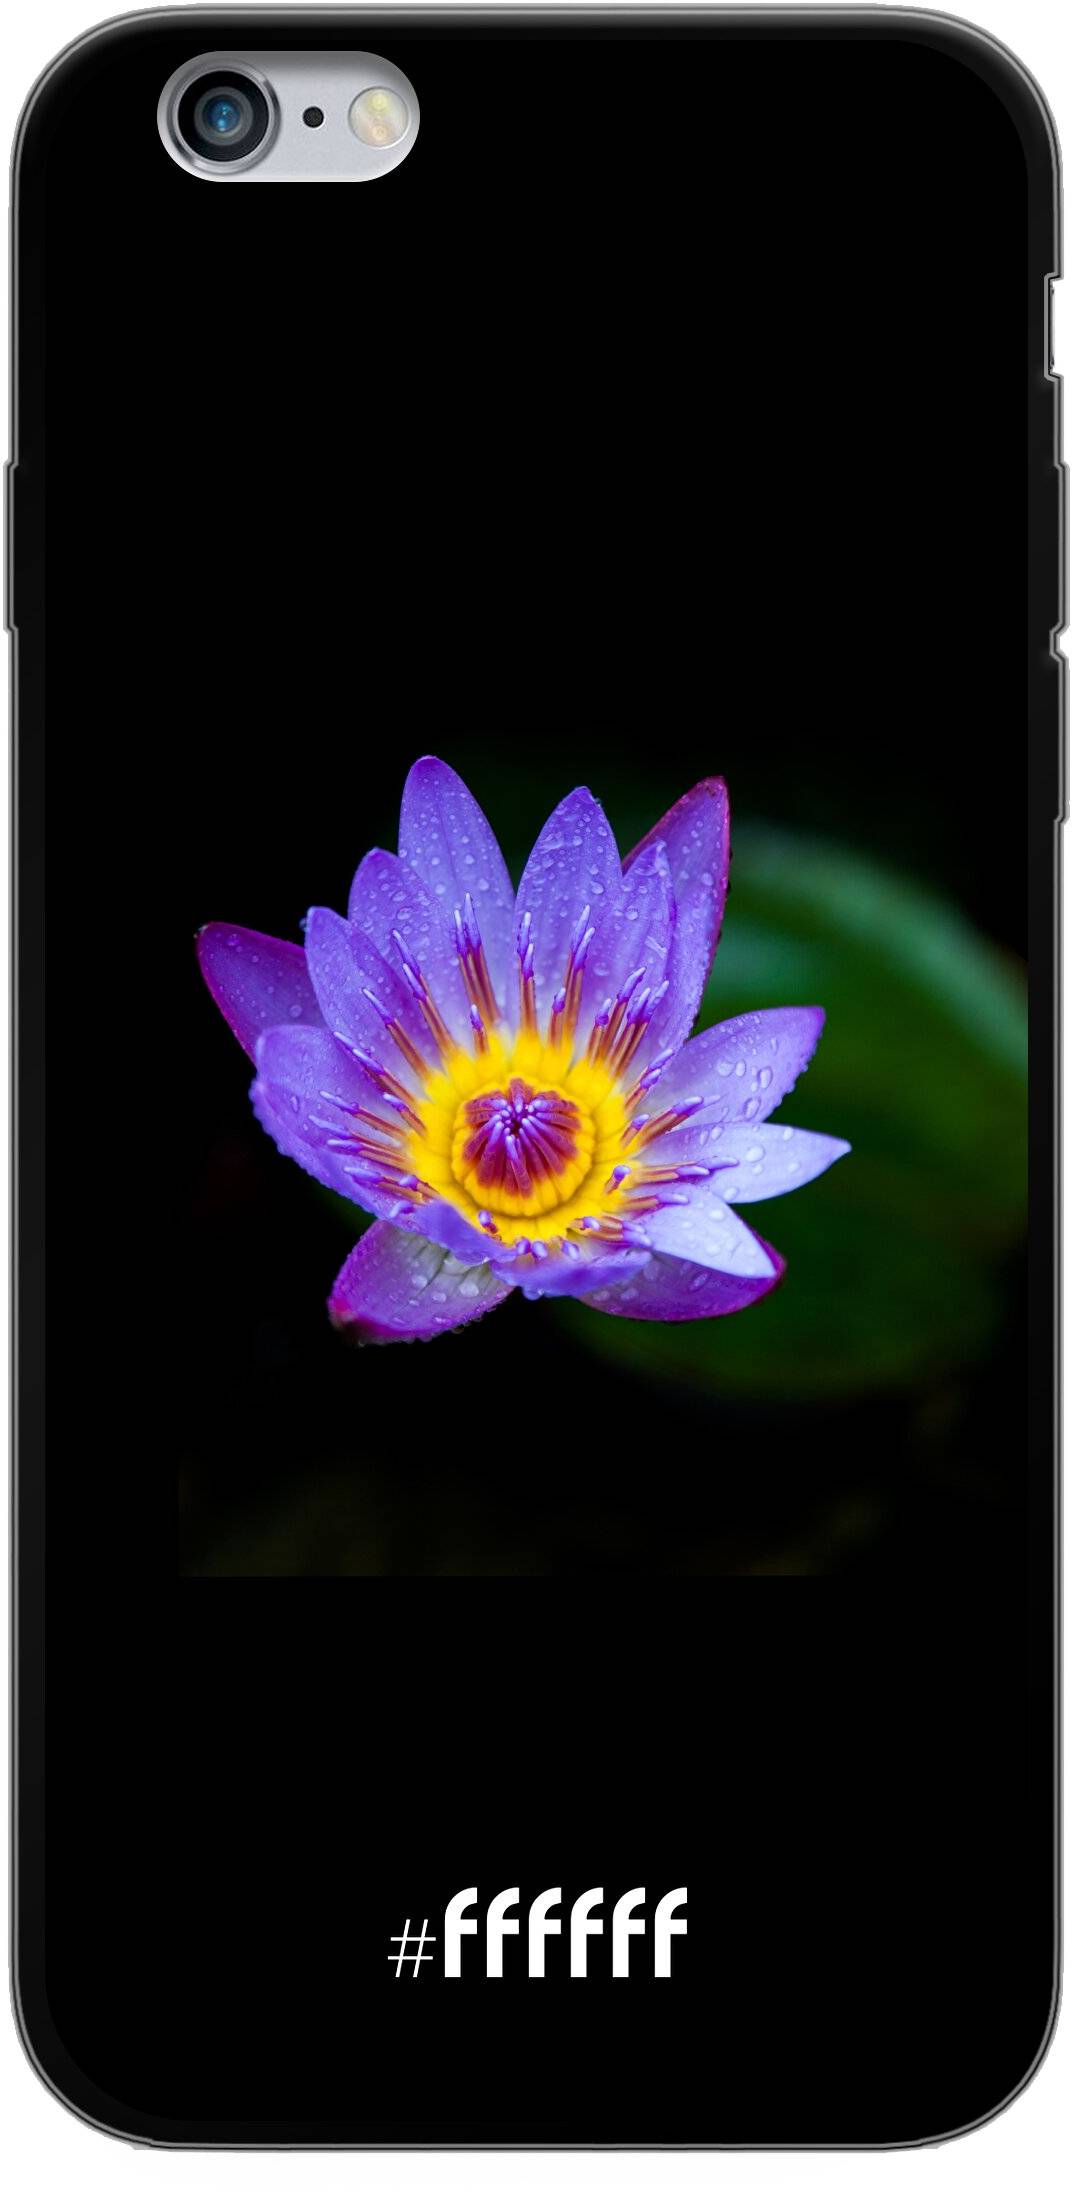 Purple Flower in the Dark iPhone 6s